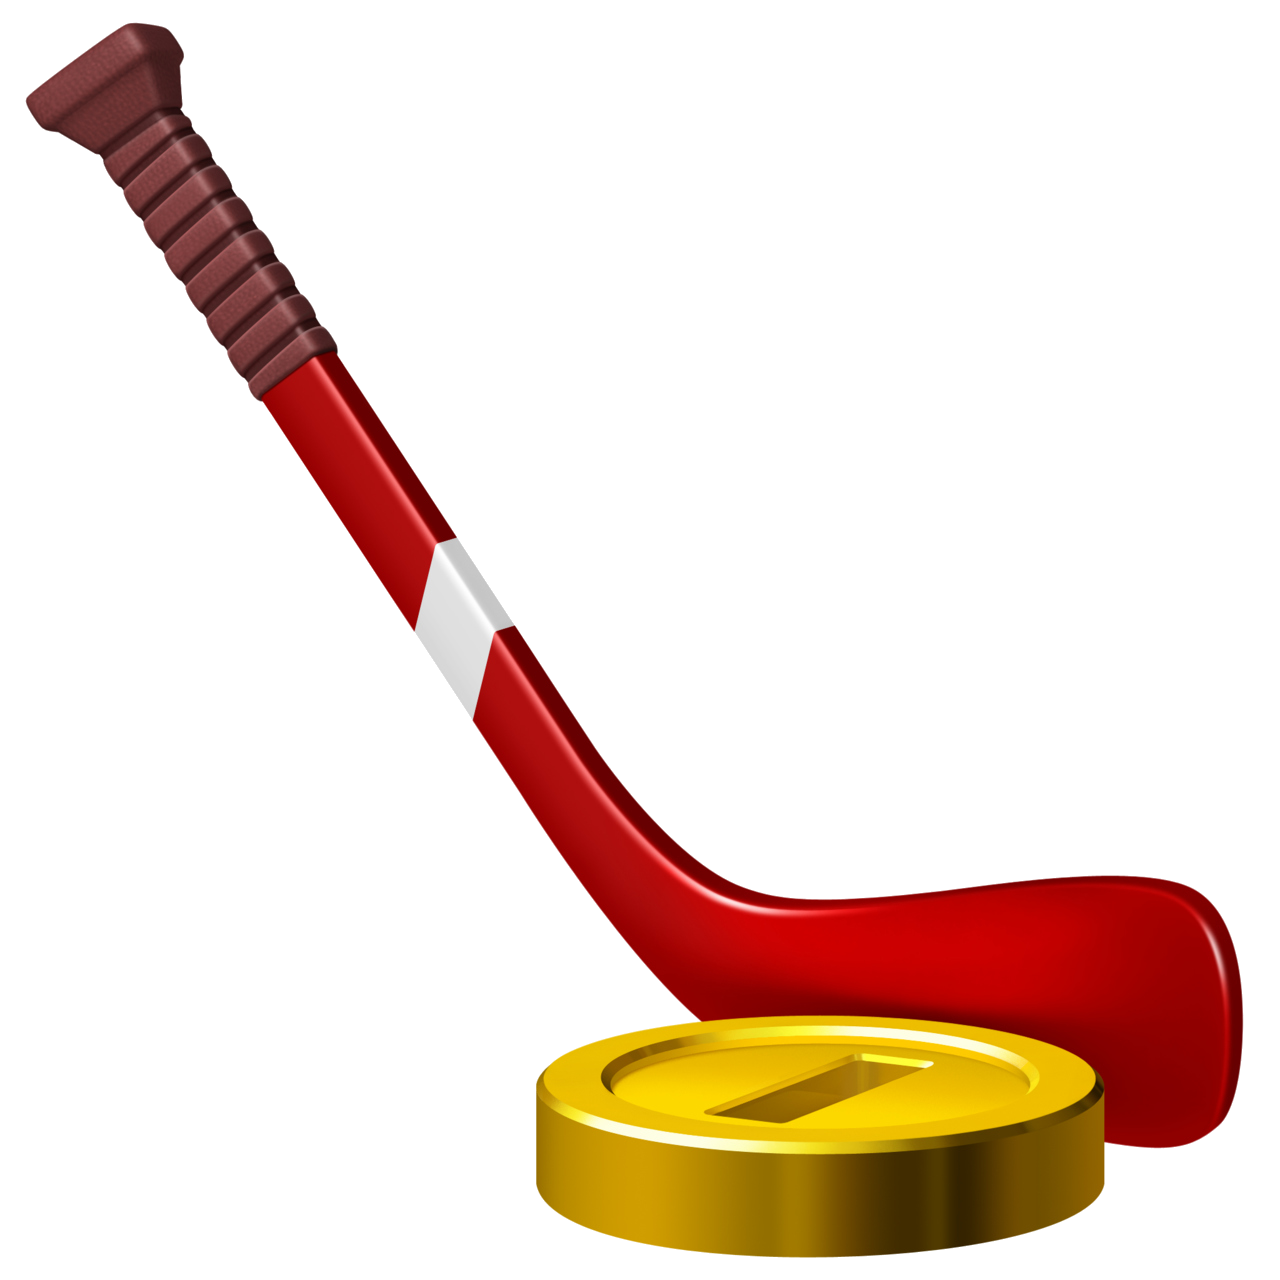 Hockey Stick Characters - Giant Bomb